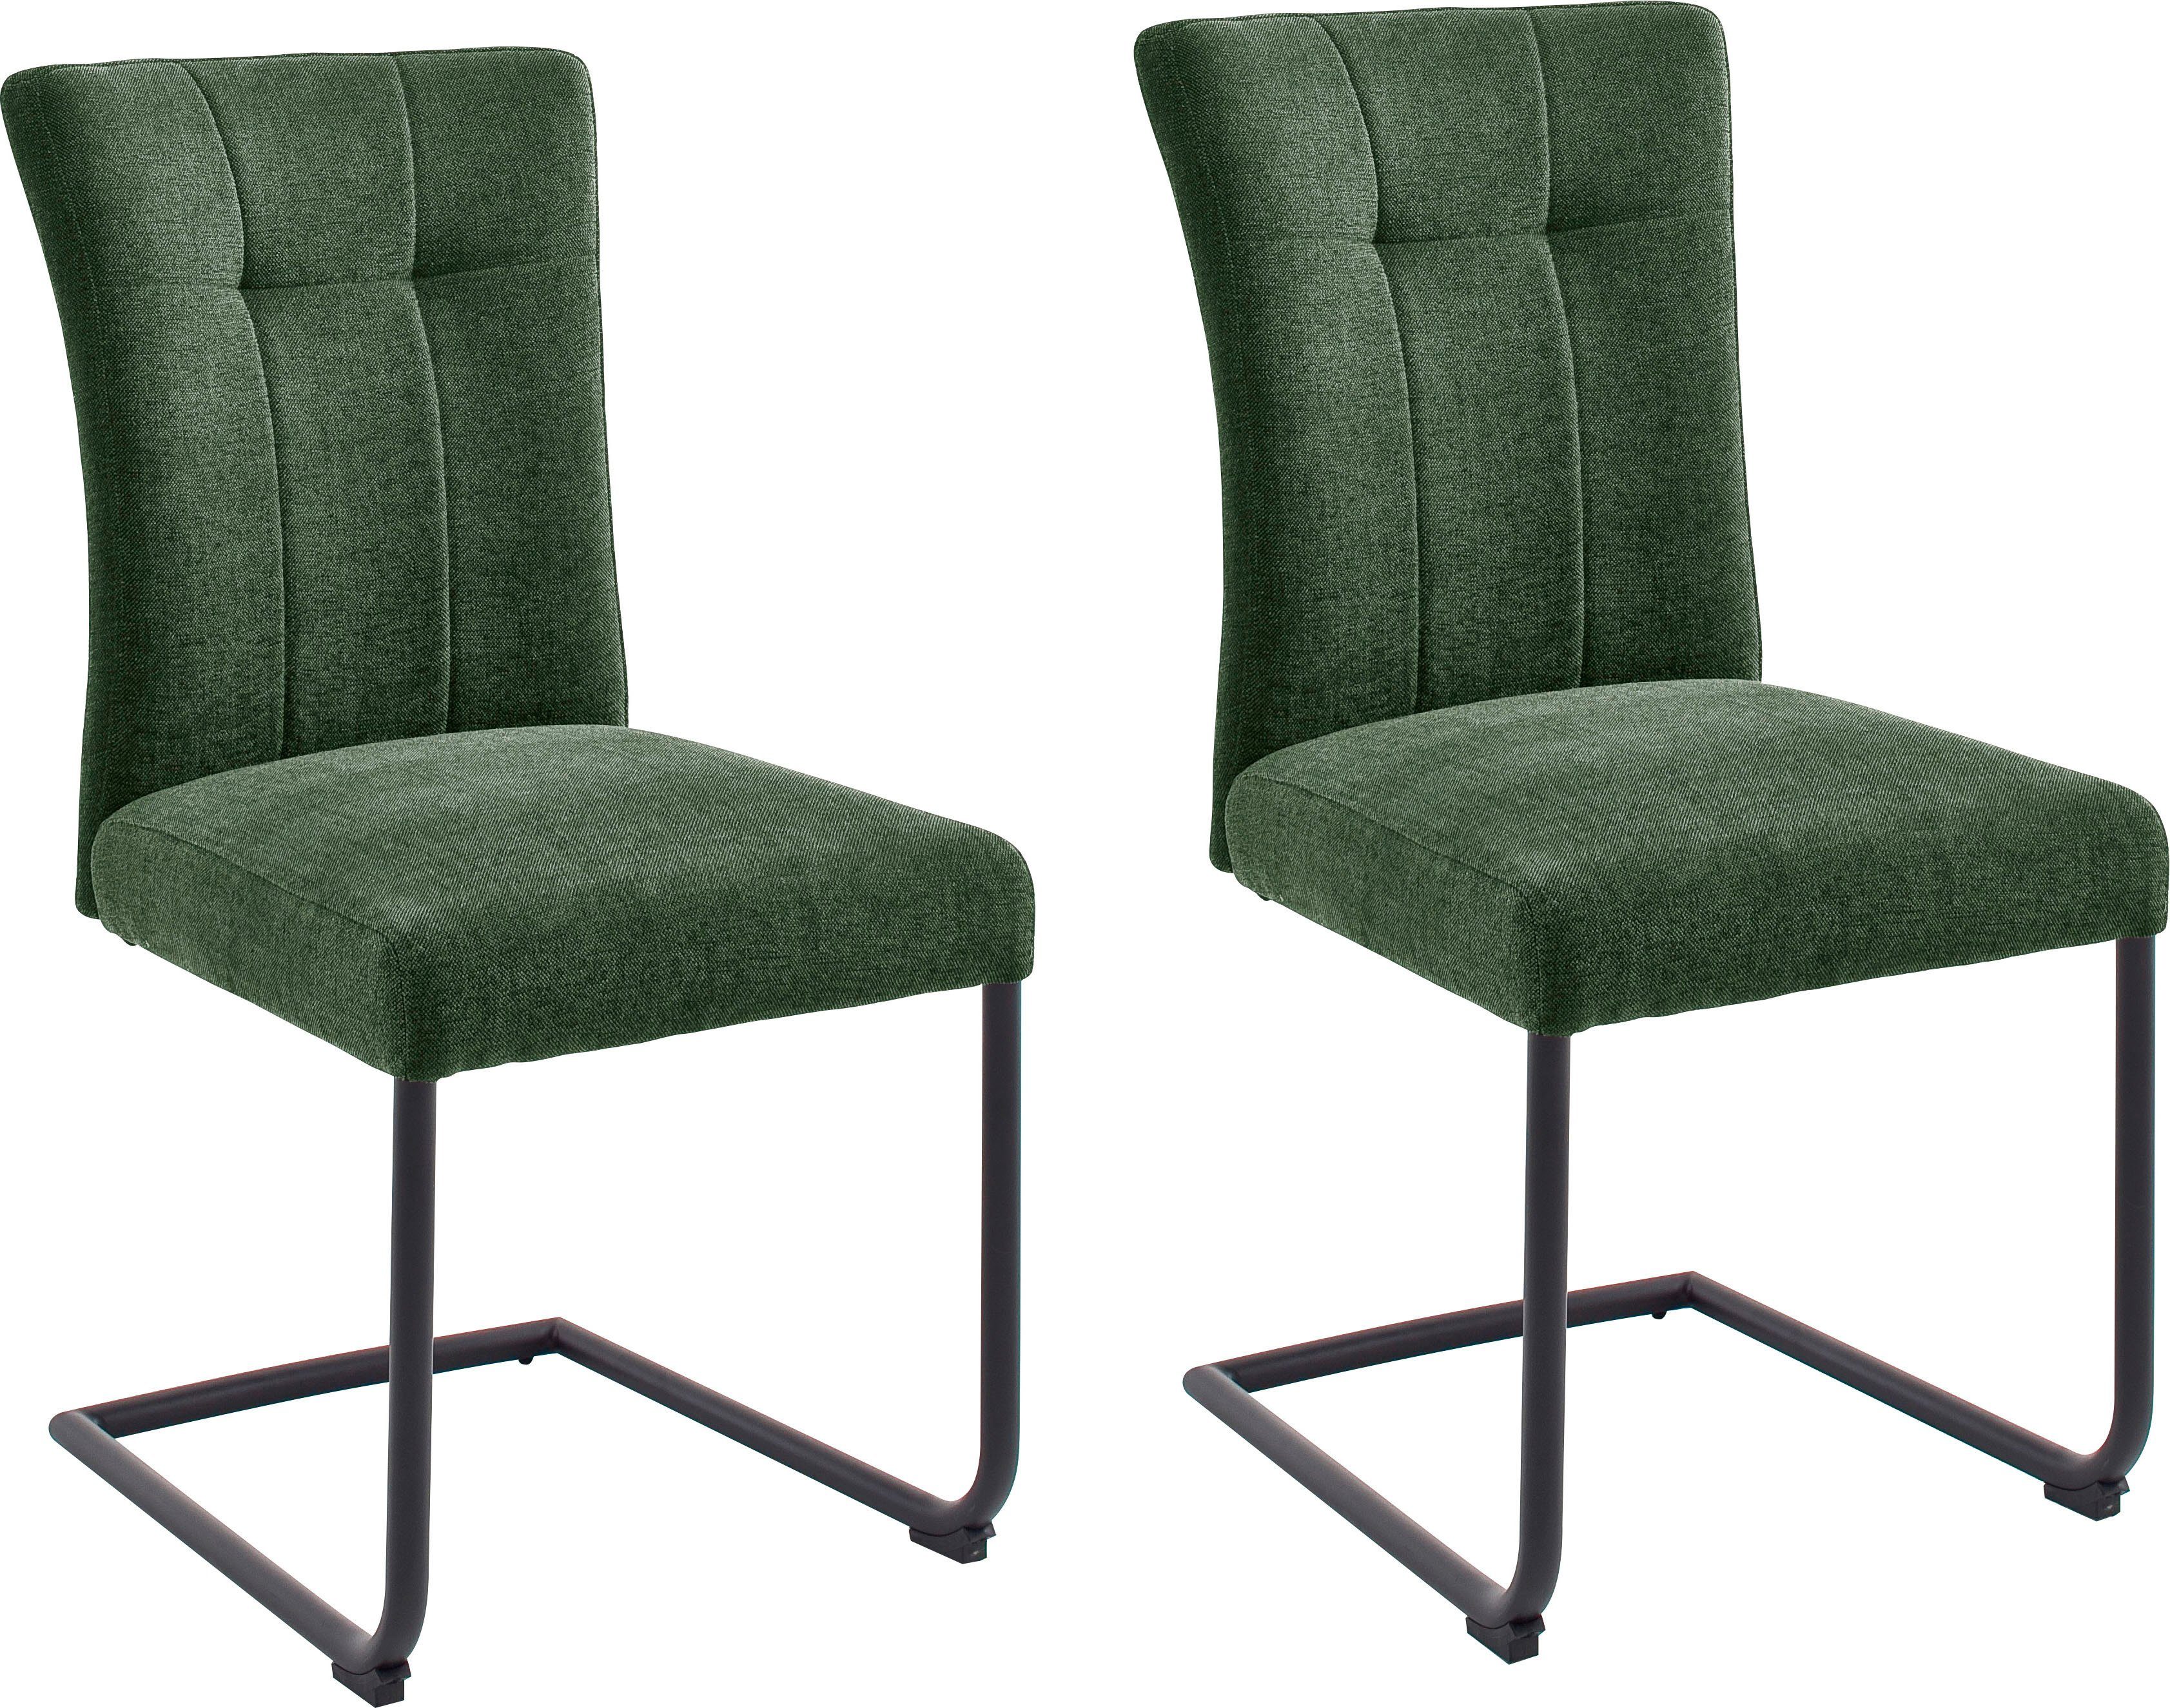 MCA furniture Vrijdragende stoel Calanda Eetkamerstoel met aqua clean bekleding, nosag vering, belastbaar tot 120 kg (set, 2 stuks)